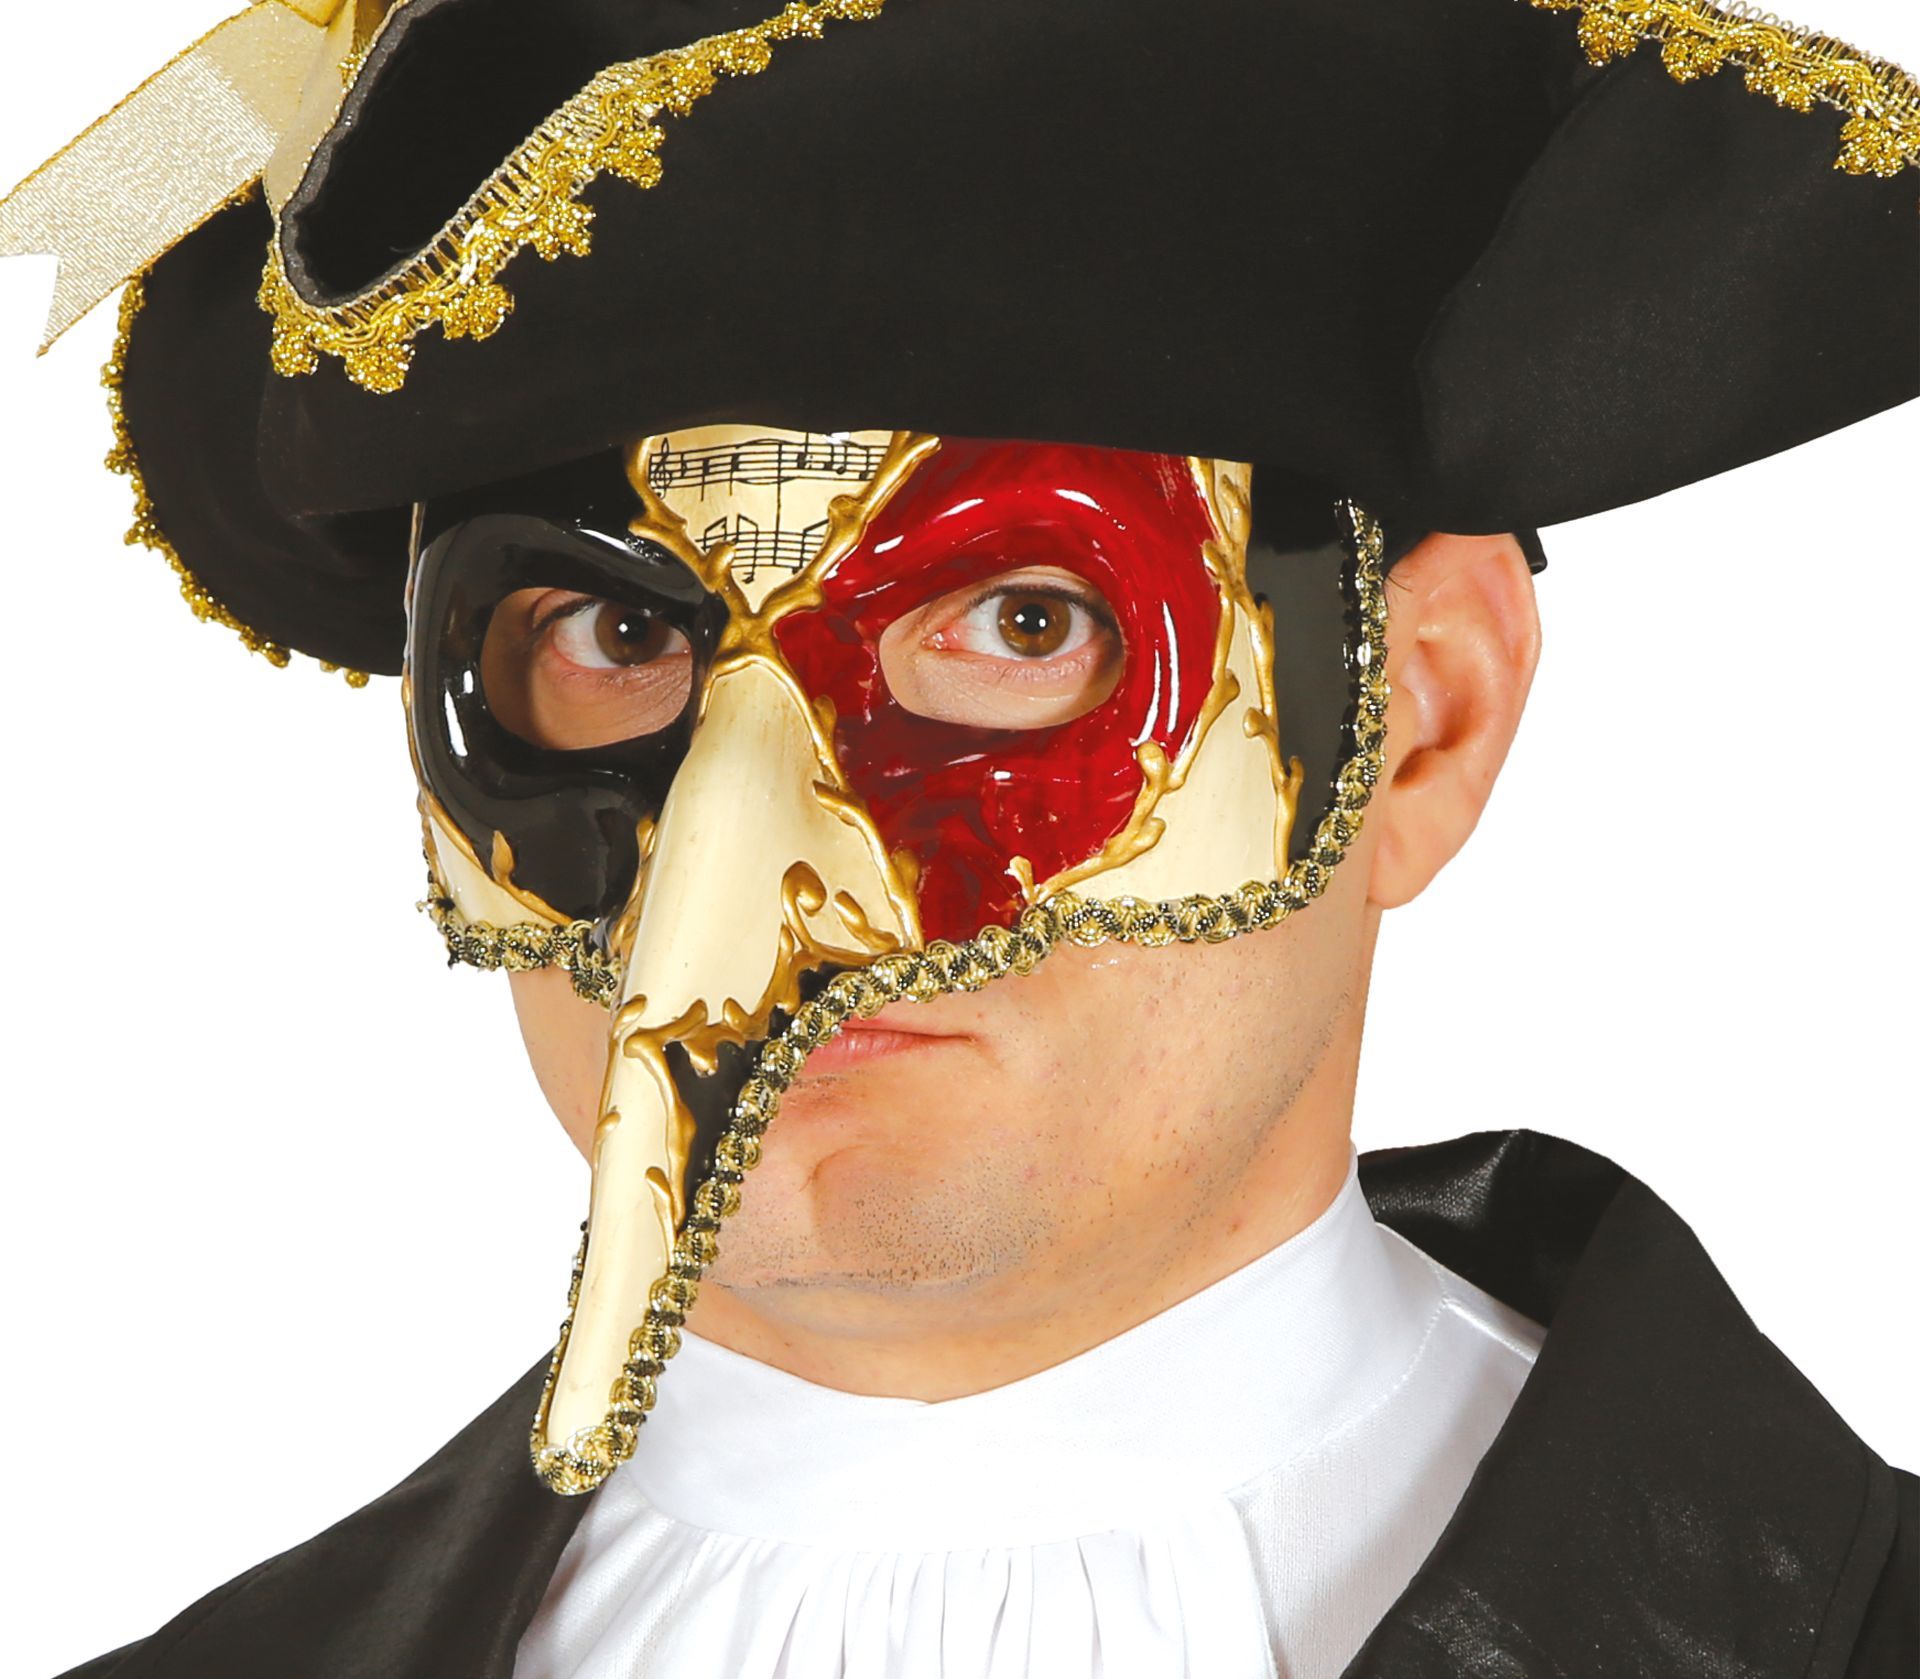 Venetiaans muzikaal masker met neus